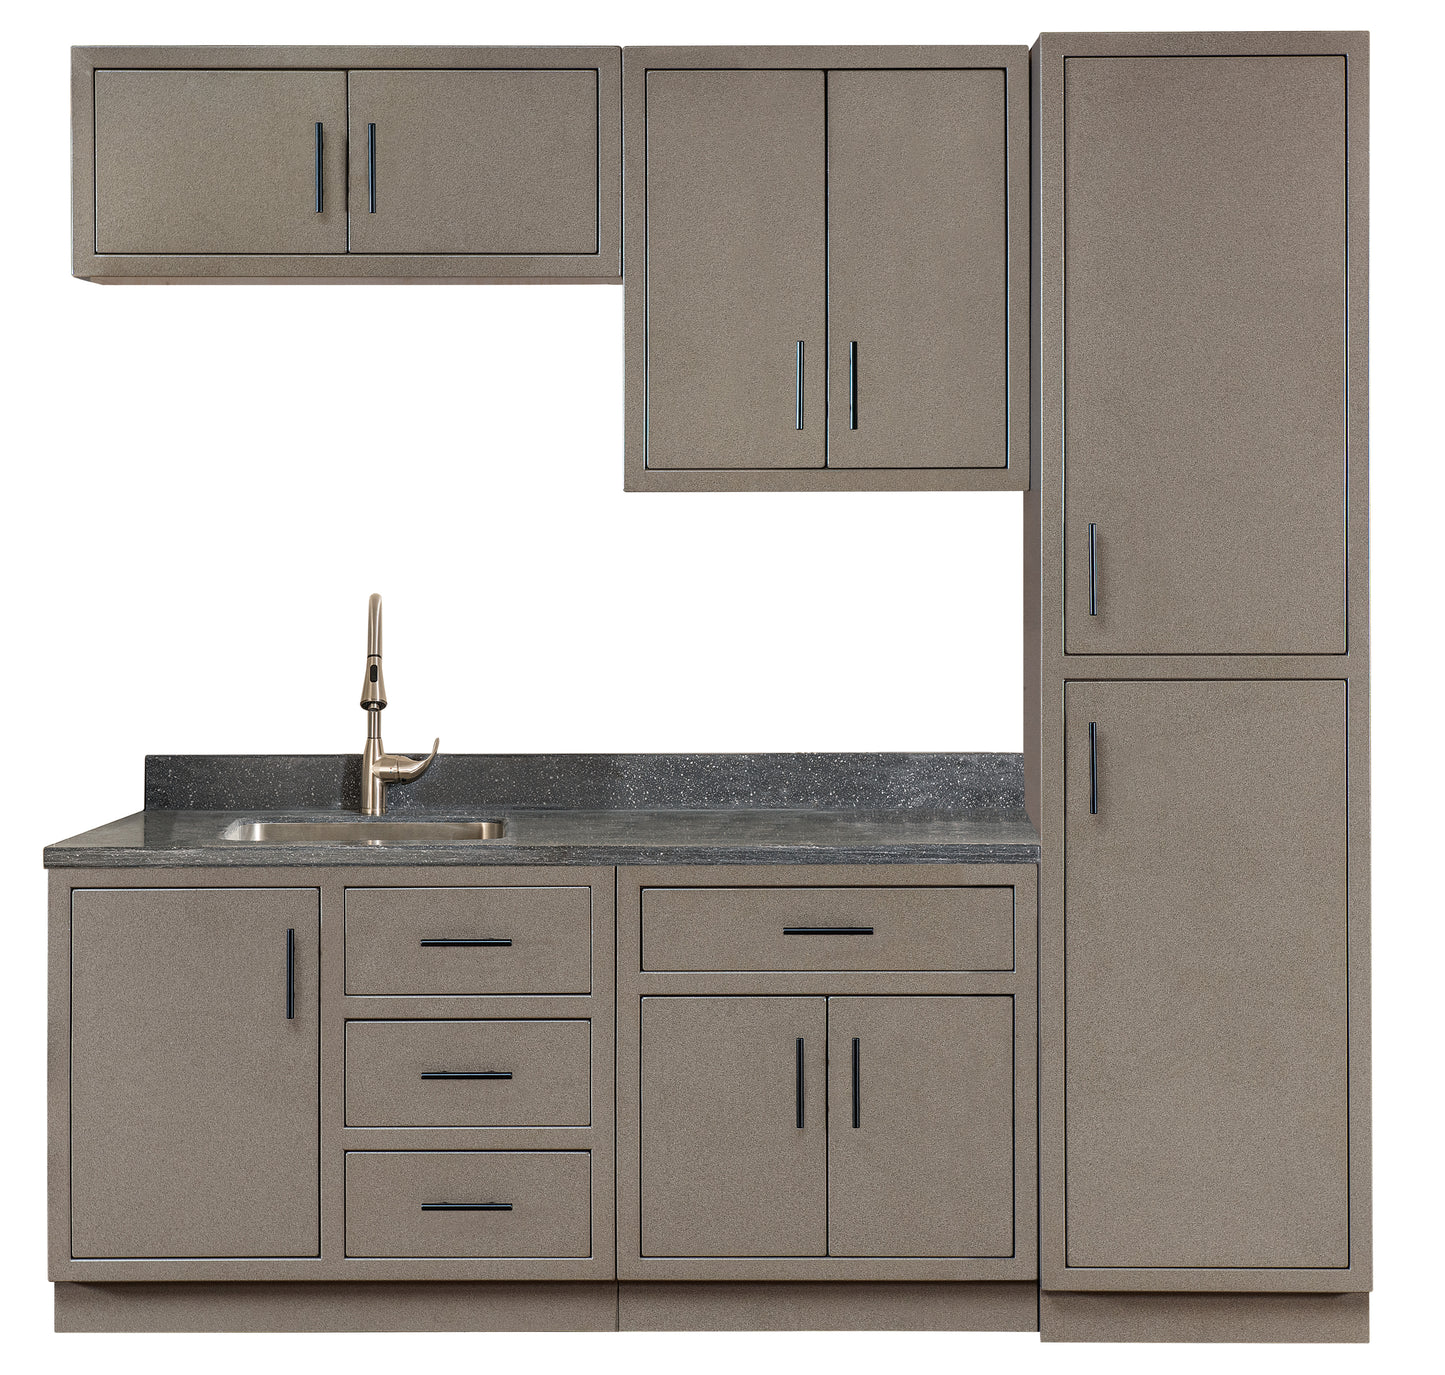 Refrigerator / Stove Overhead Cabinet - Panel Top